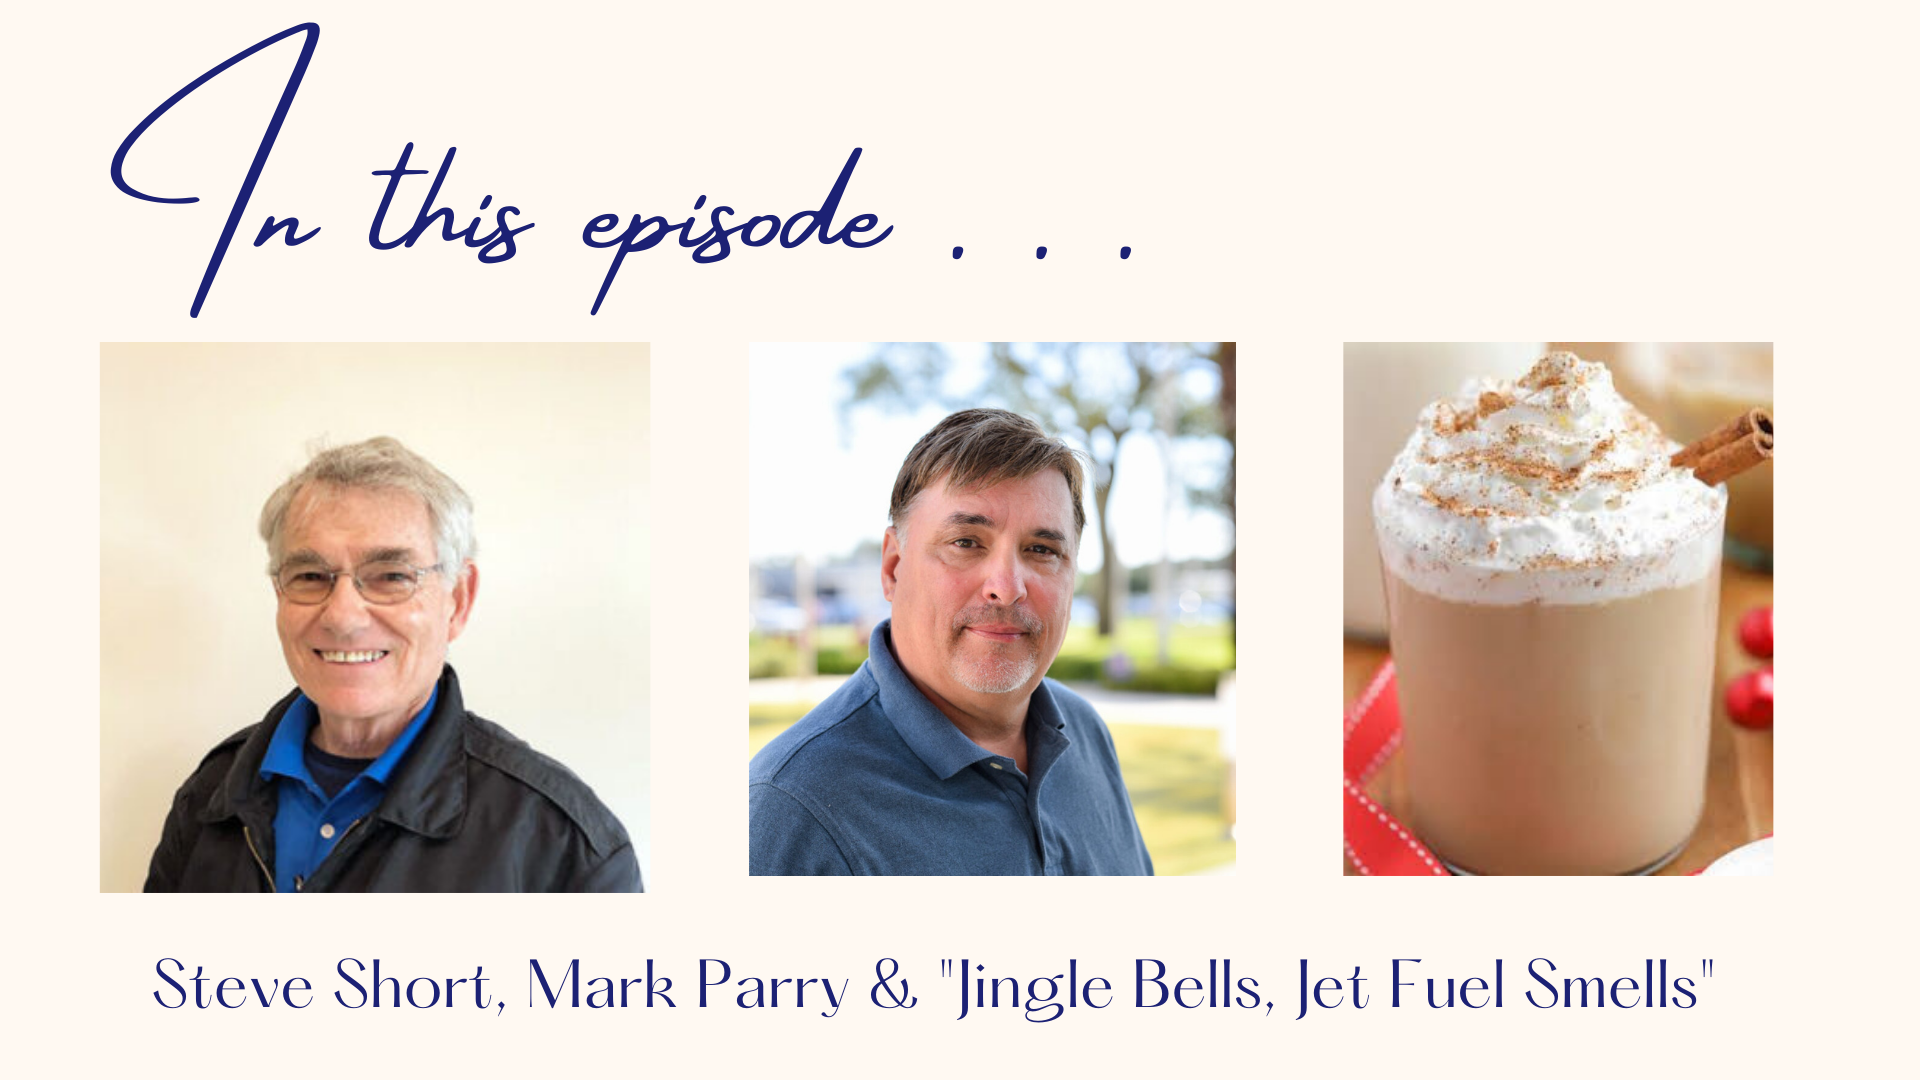 Mark Parry, Steve Short, and the cocktail "Jingle Bells, Jet Fuel Smells!"